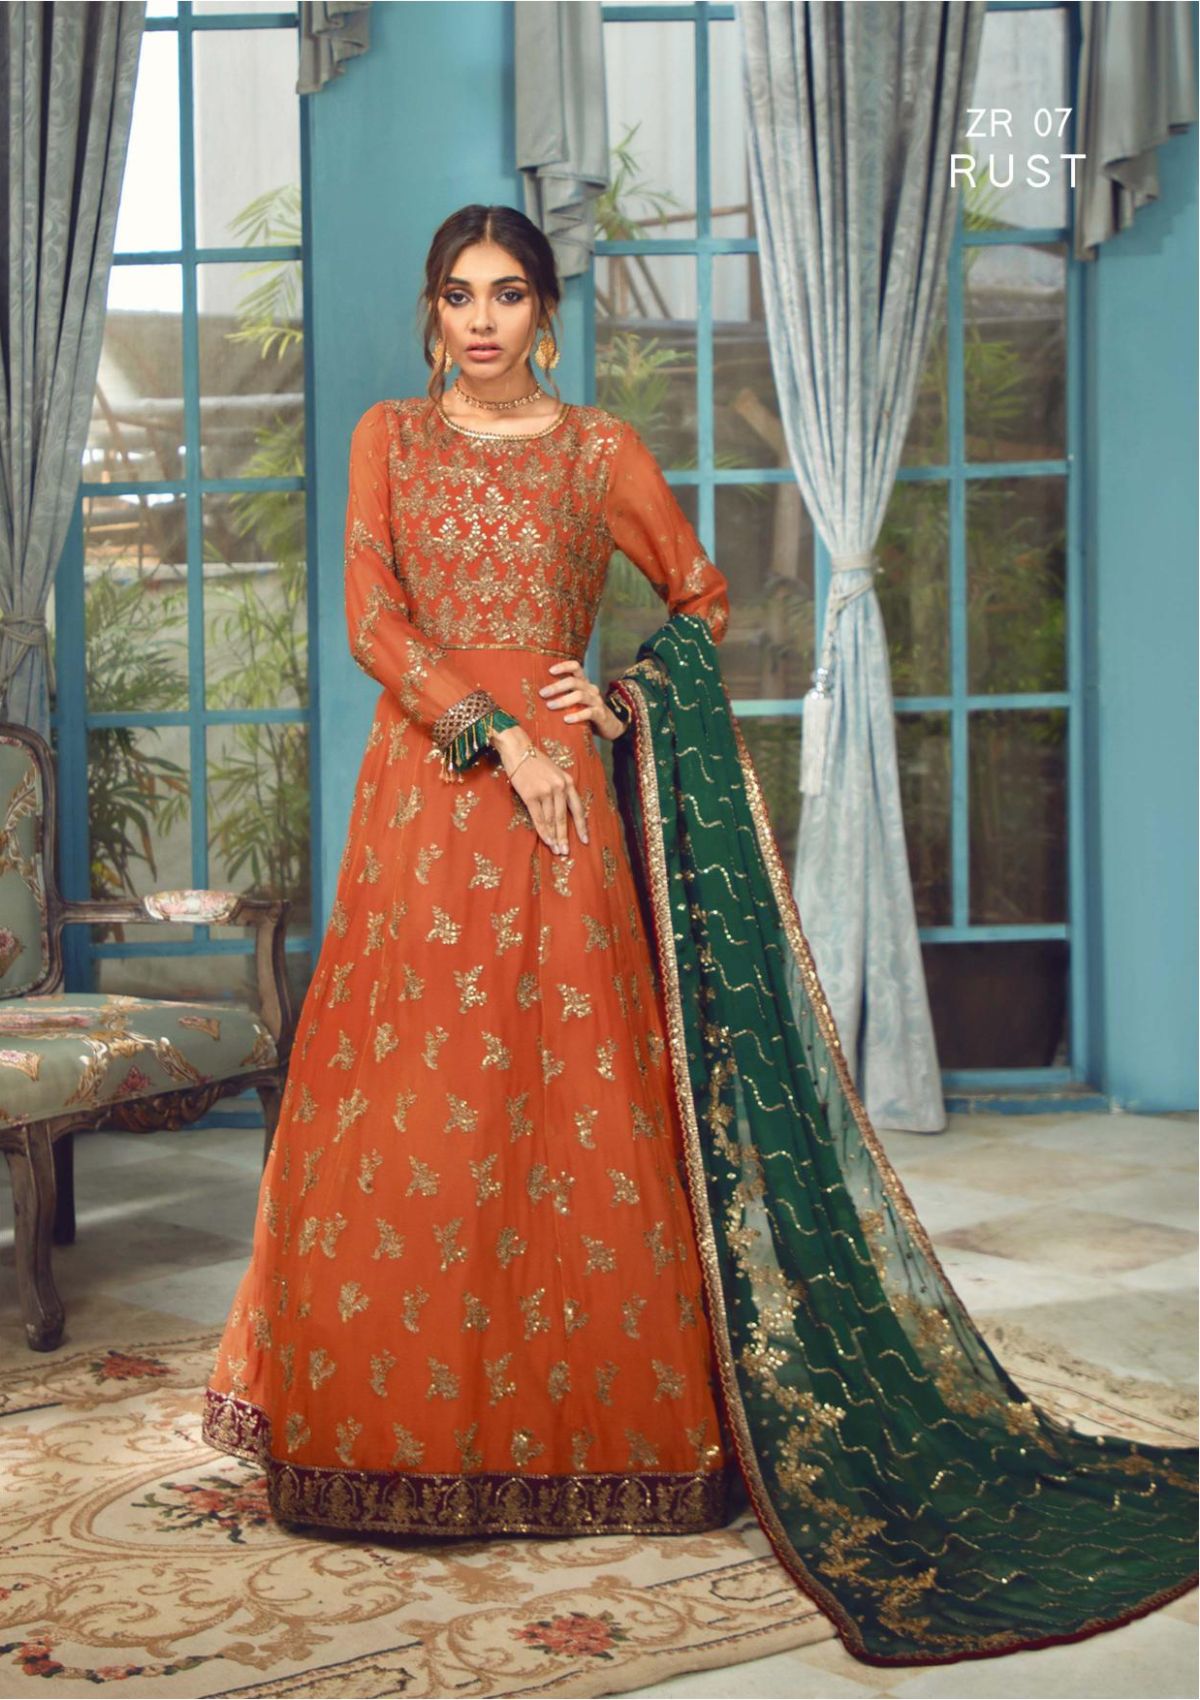 Formal Dress - Zarif - Rangrez - RUST D#07 available at Saleem Fabrics Traditions